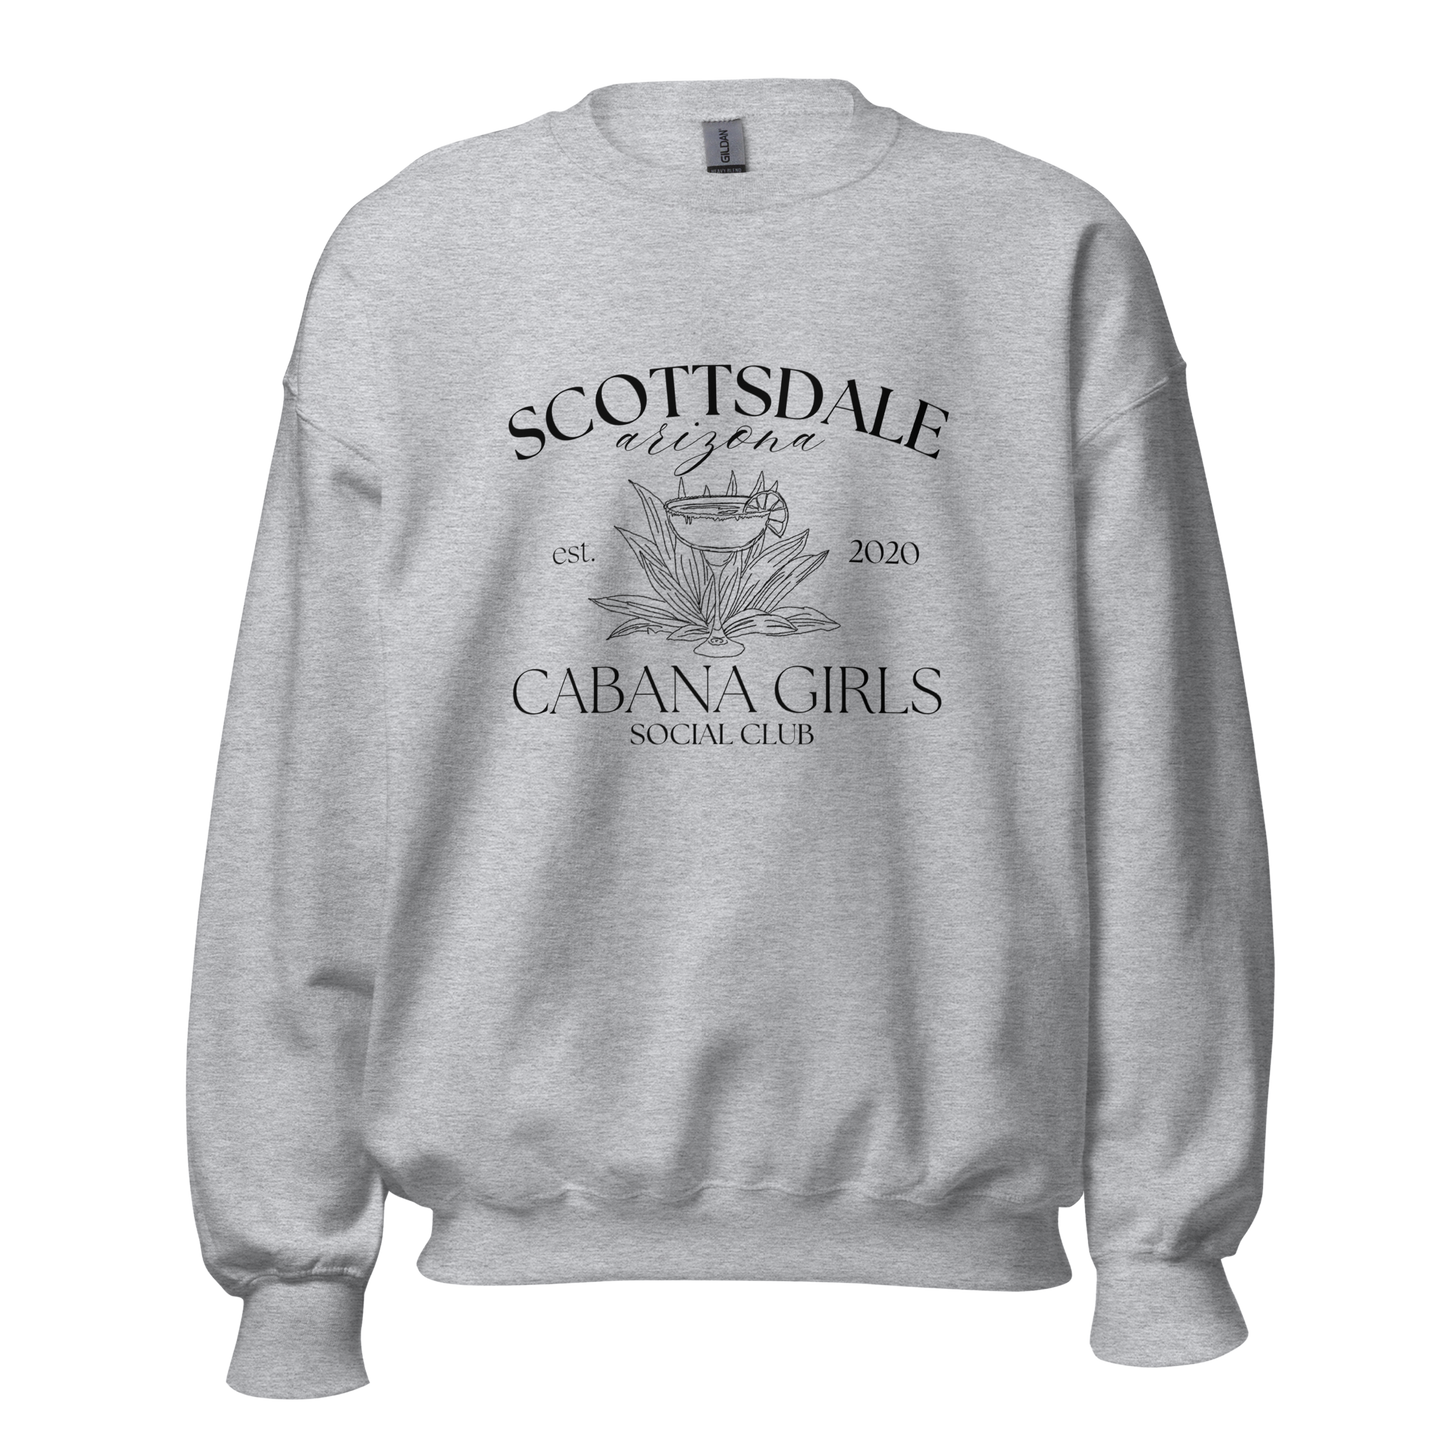 Social Club Cabana Girls Scottsdale Sweatshirt